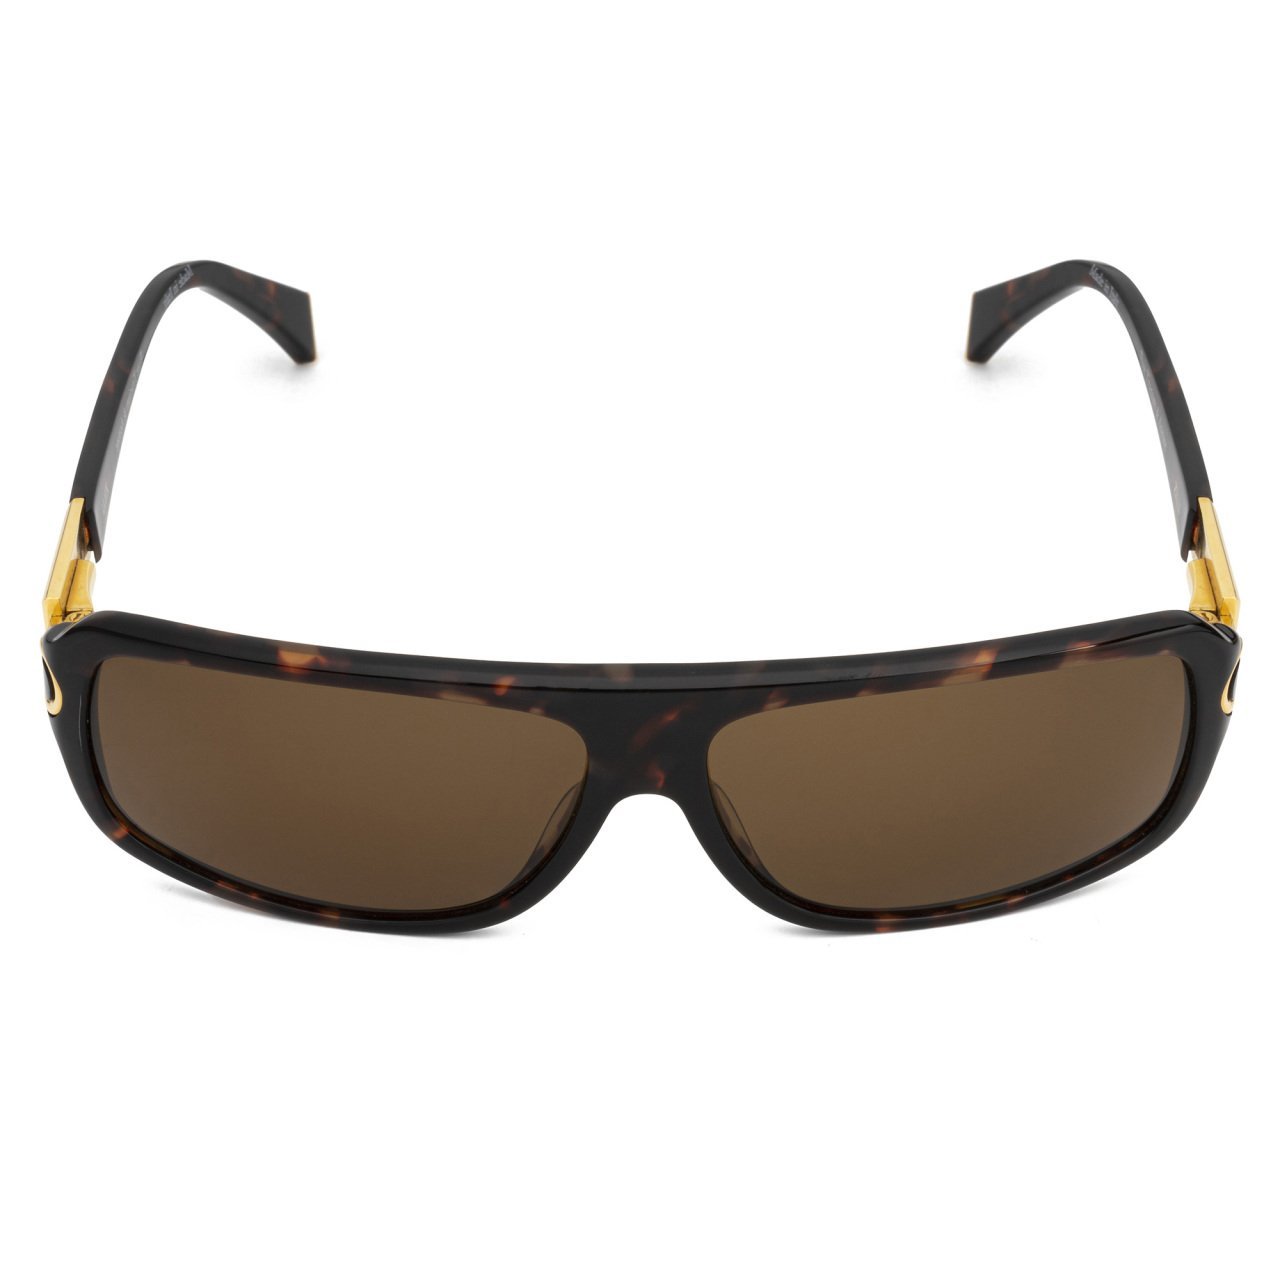 Zilli Damon Gold Women's Sunglasses